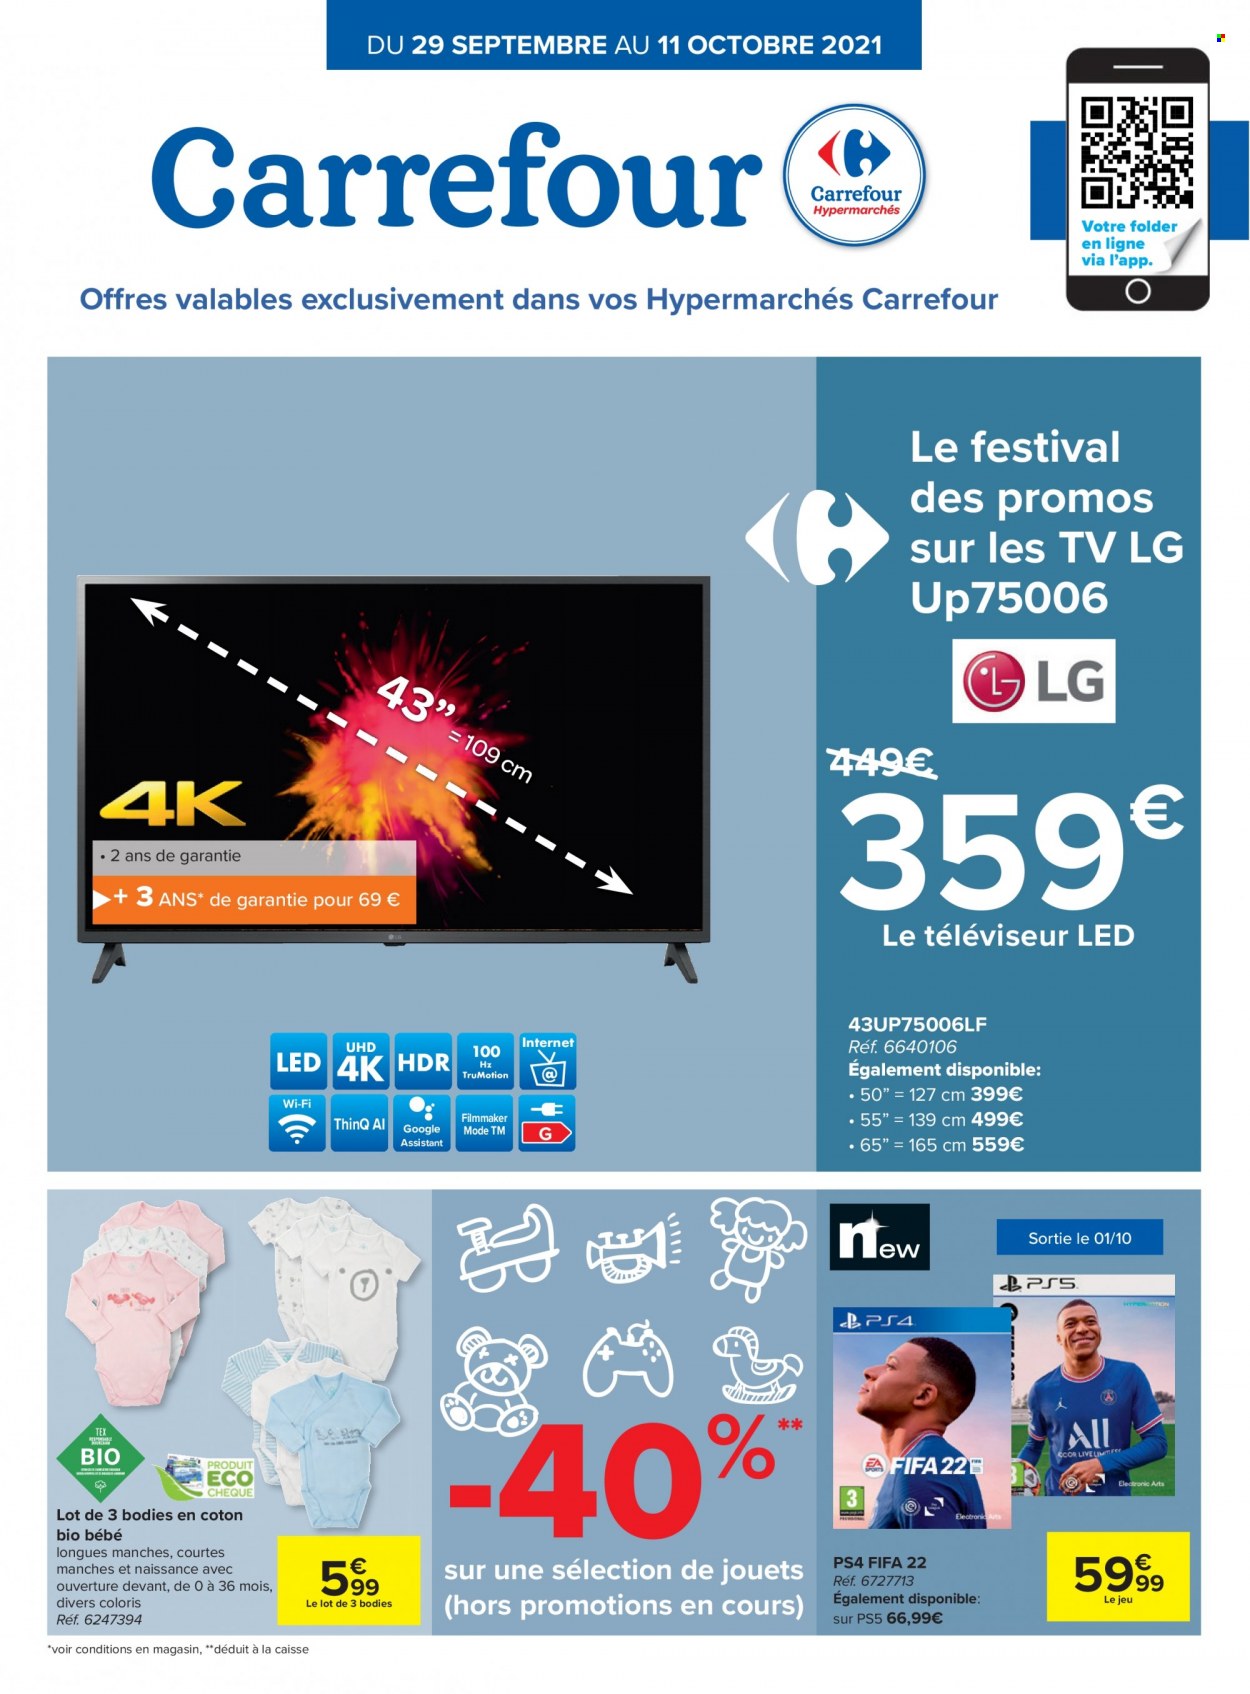 thumbnail - Carrefour hypermarkt-aanbieding - 29/09/2021 - 11/10/2021 -  producten in de aanbieding - LG, PlayStation 4, PlayStation 5, TV. Pagina 1.